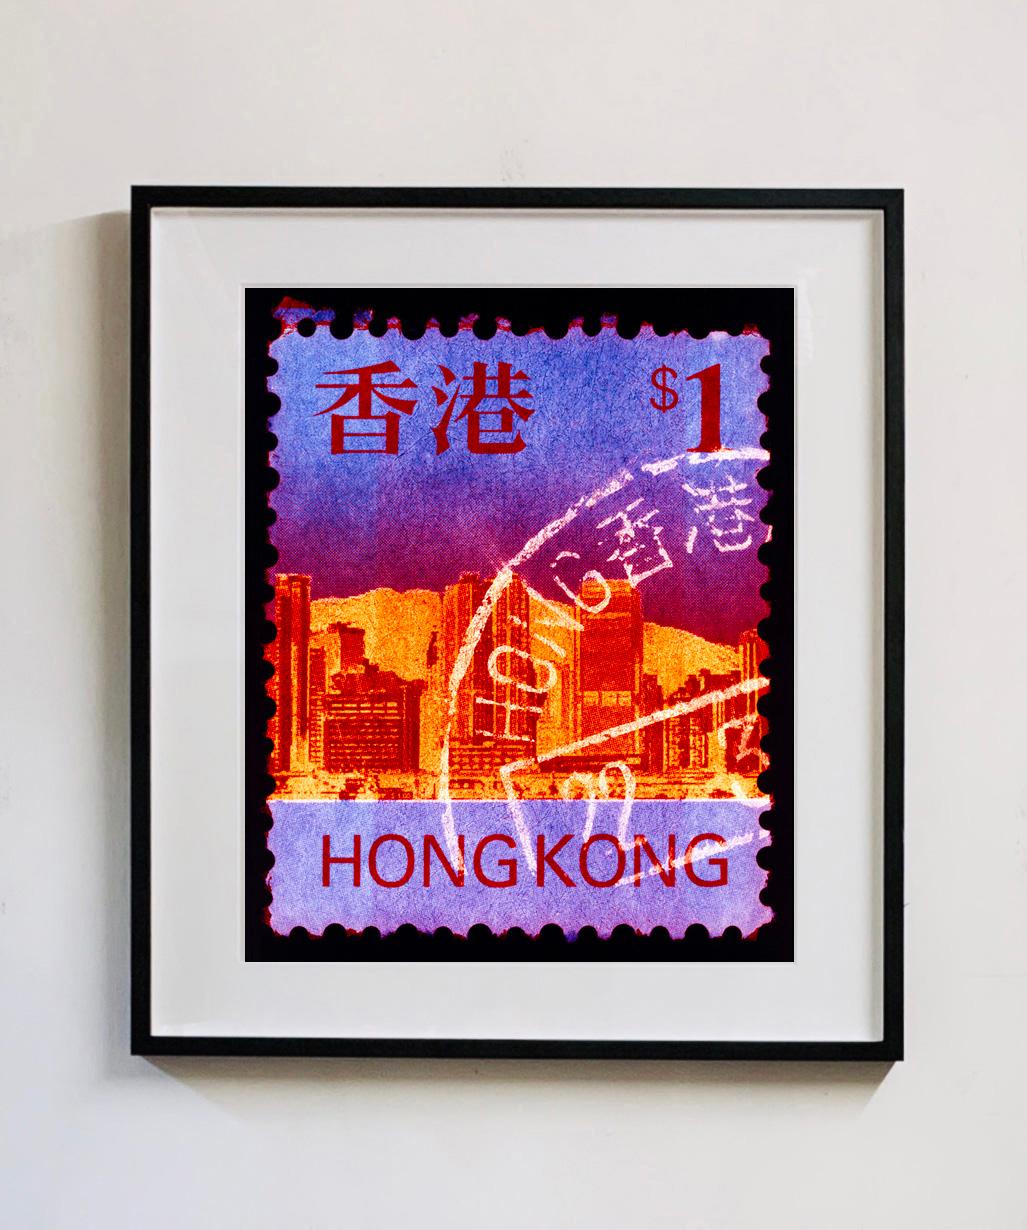 Briefmarkensammlung aus Hongkong, HK$1 – Pop-Art-Farbfotografie – Photograph von Heidler & Heeps